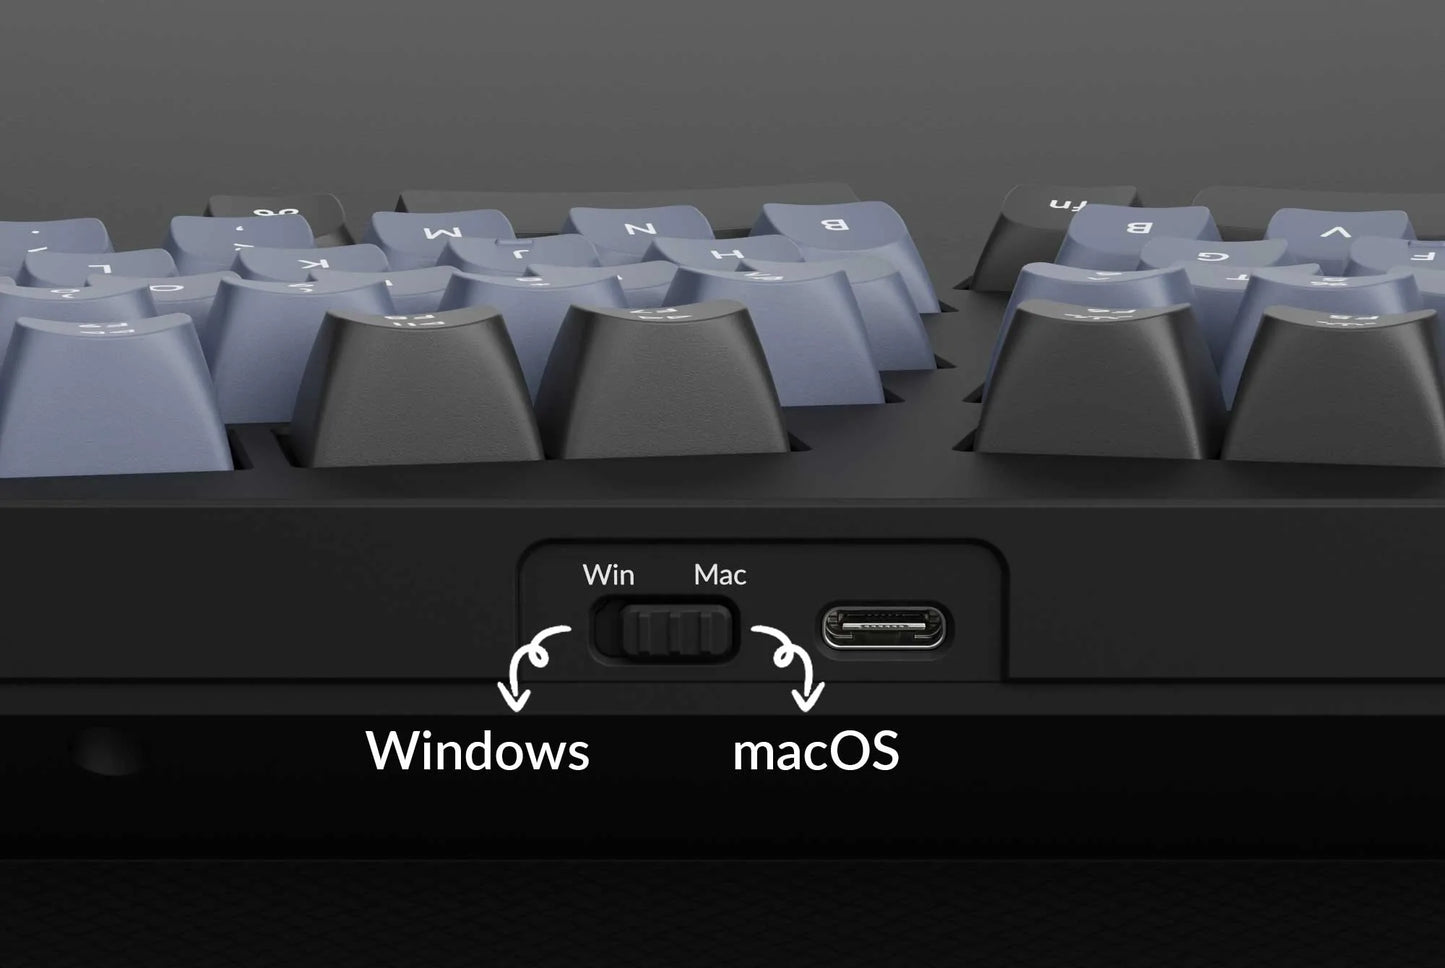 Keychron Q10 - QMK Compatible Alice Keyboard Kit